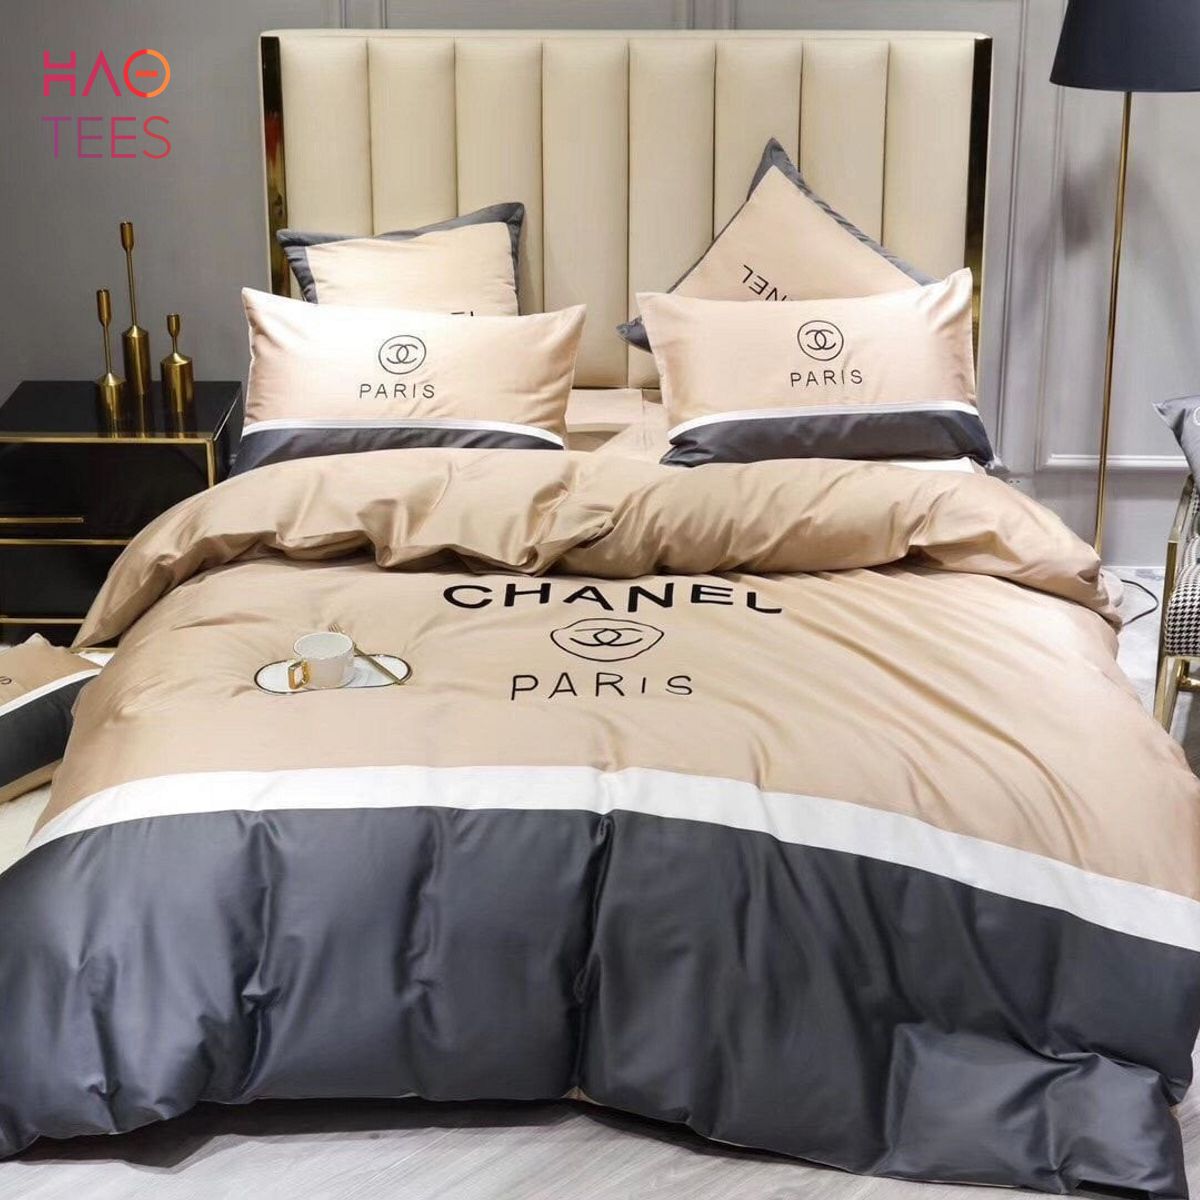 Luxury cn chanel type 98 luxury brand Bedding Sets home decor